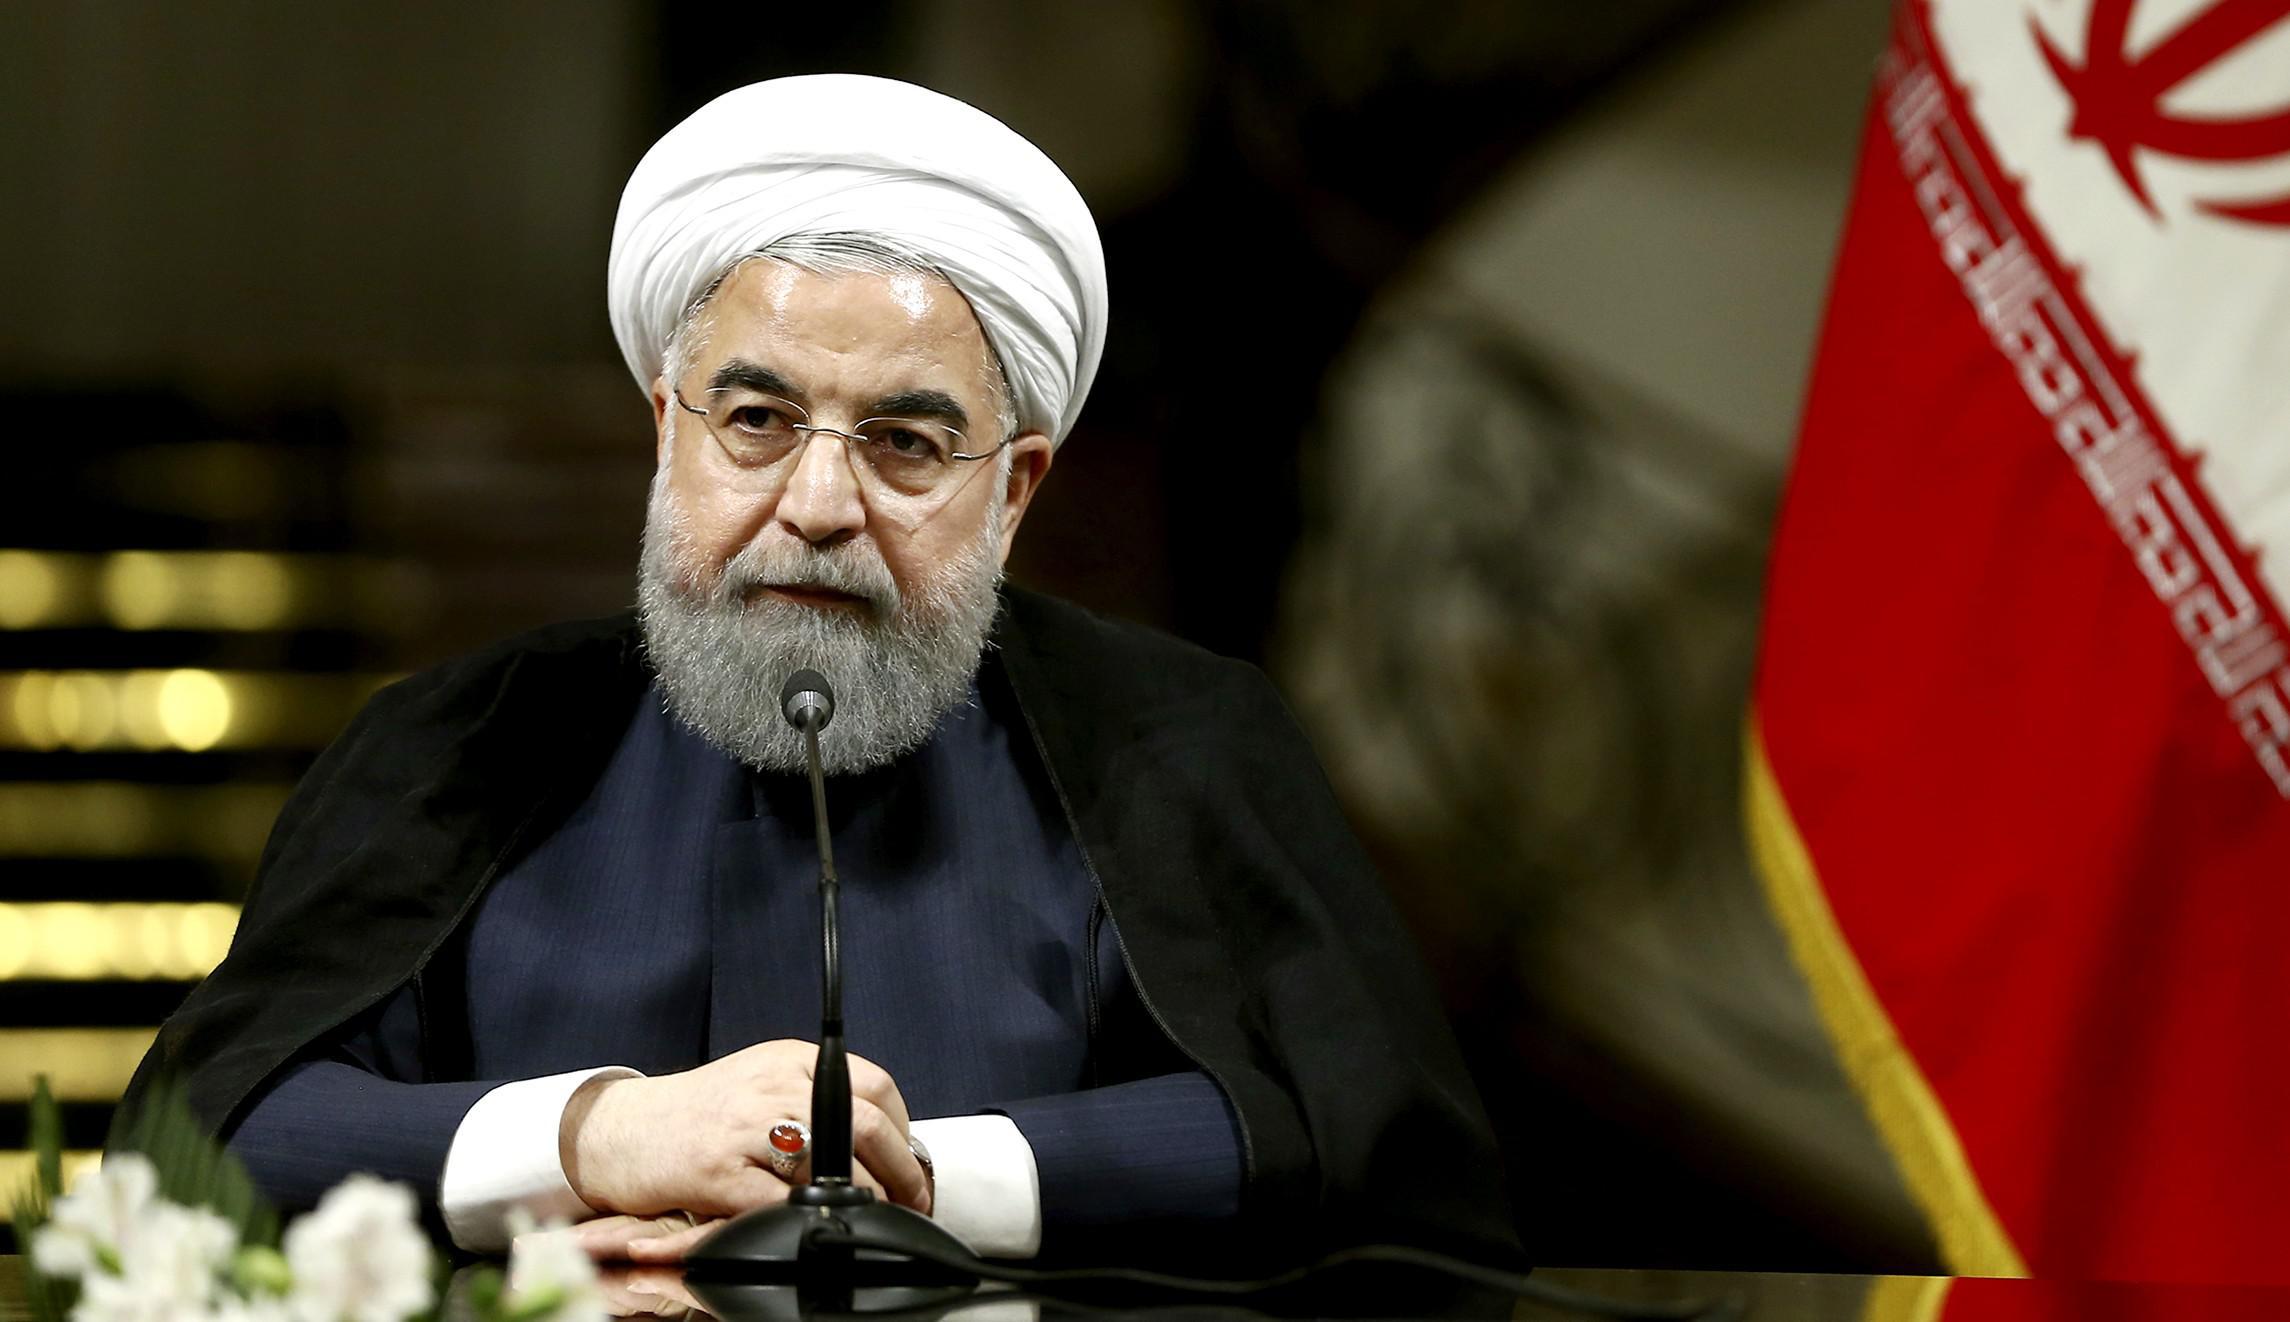 ifmat - Iran and Al Qaeda have shared enemies